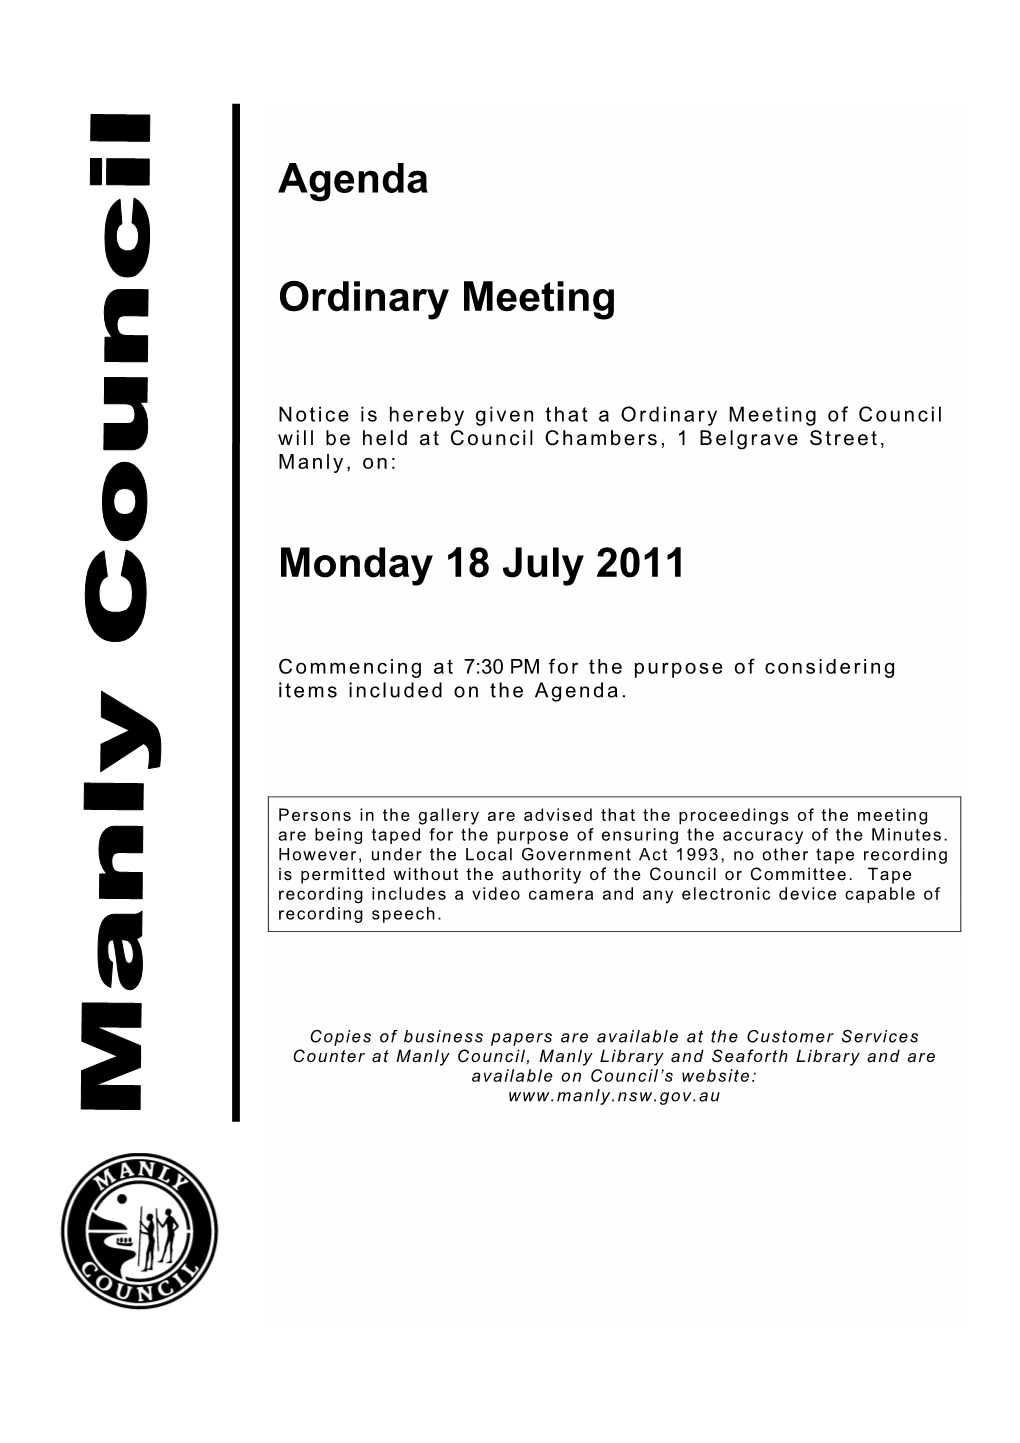 Agenda Ordinary Meeting Monday 18 July 2011